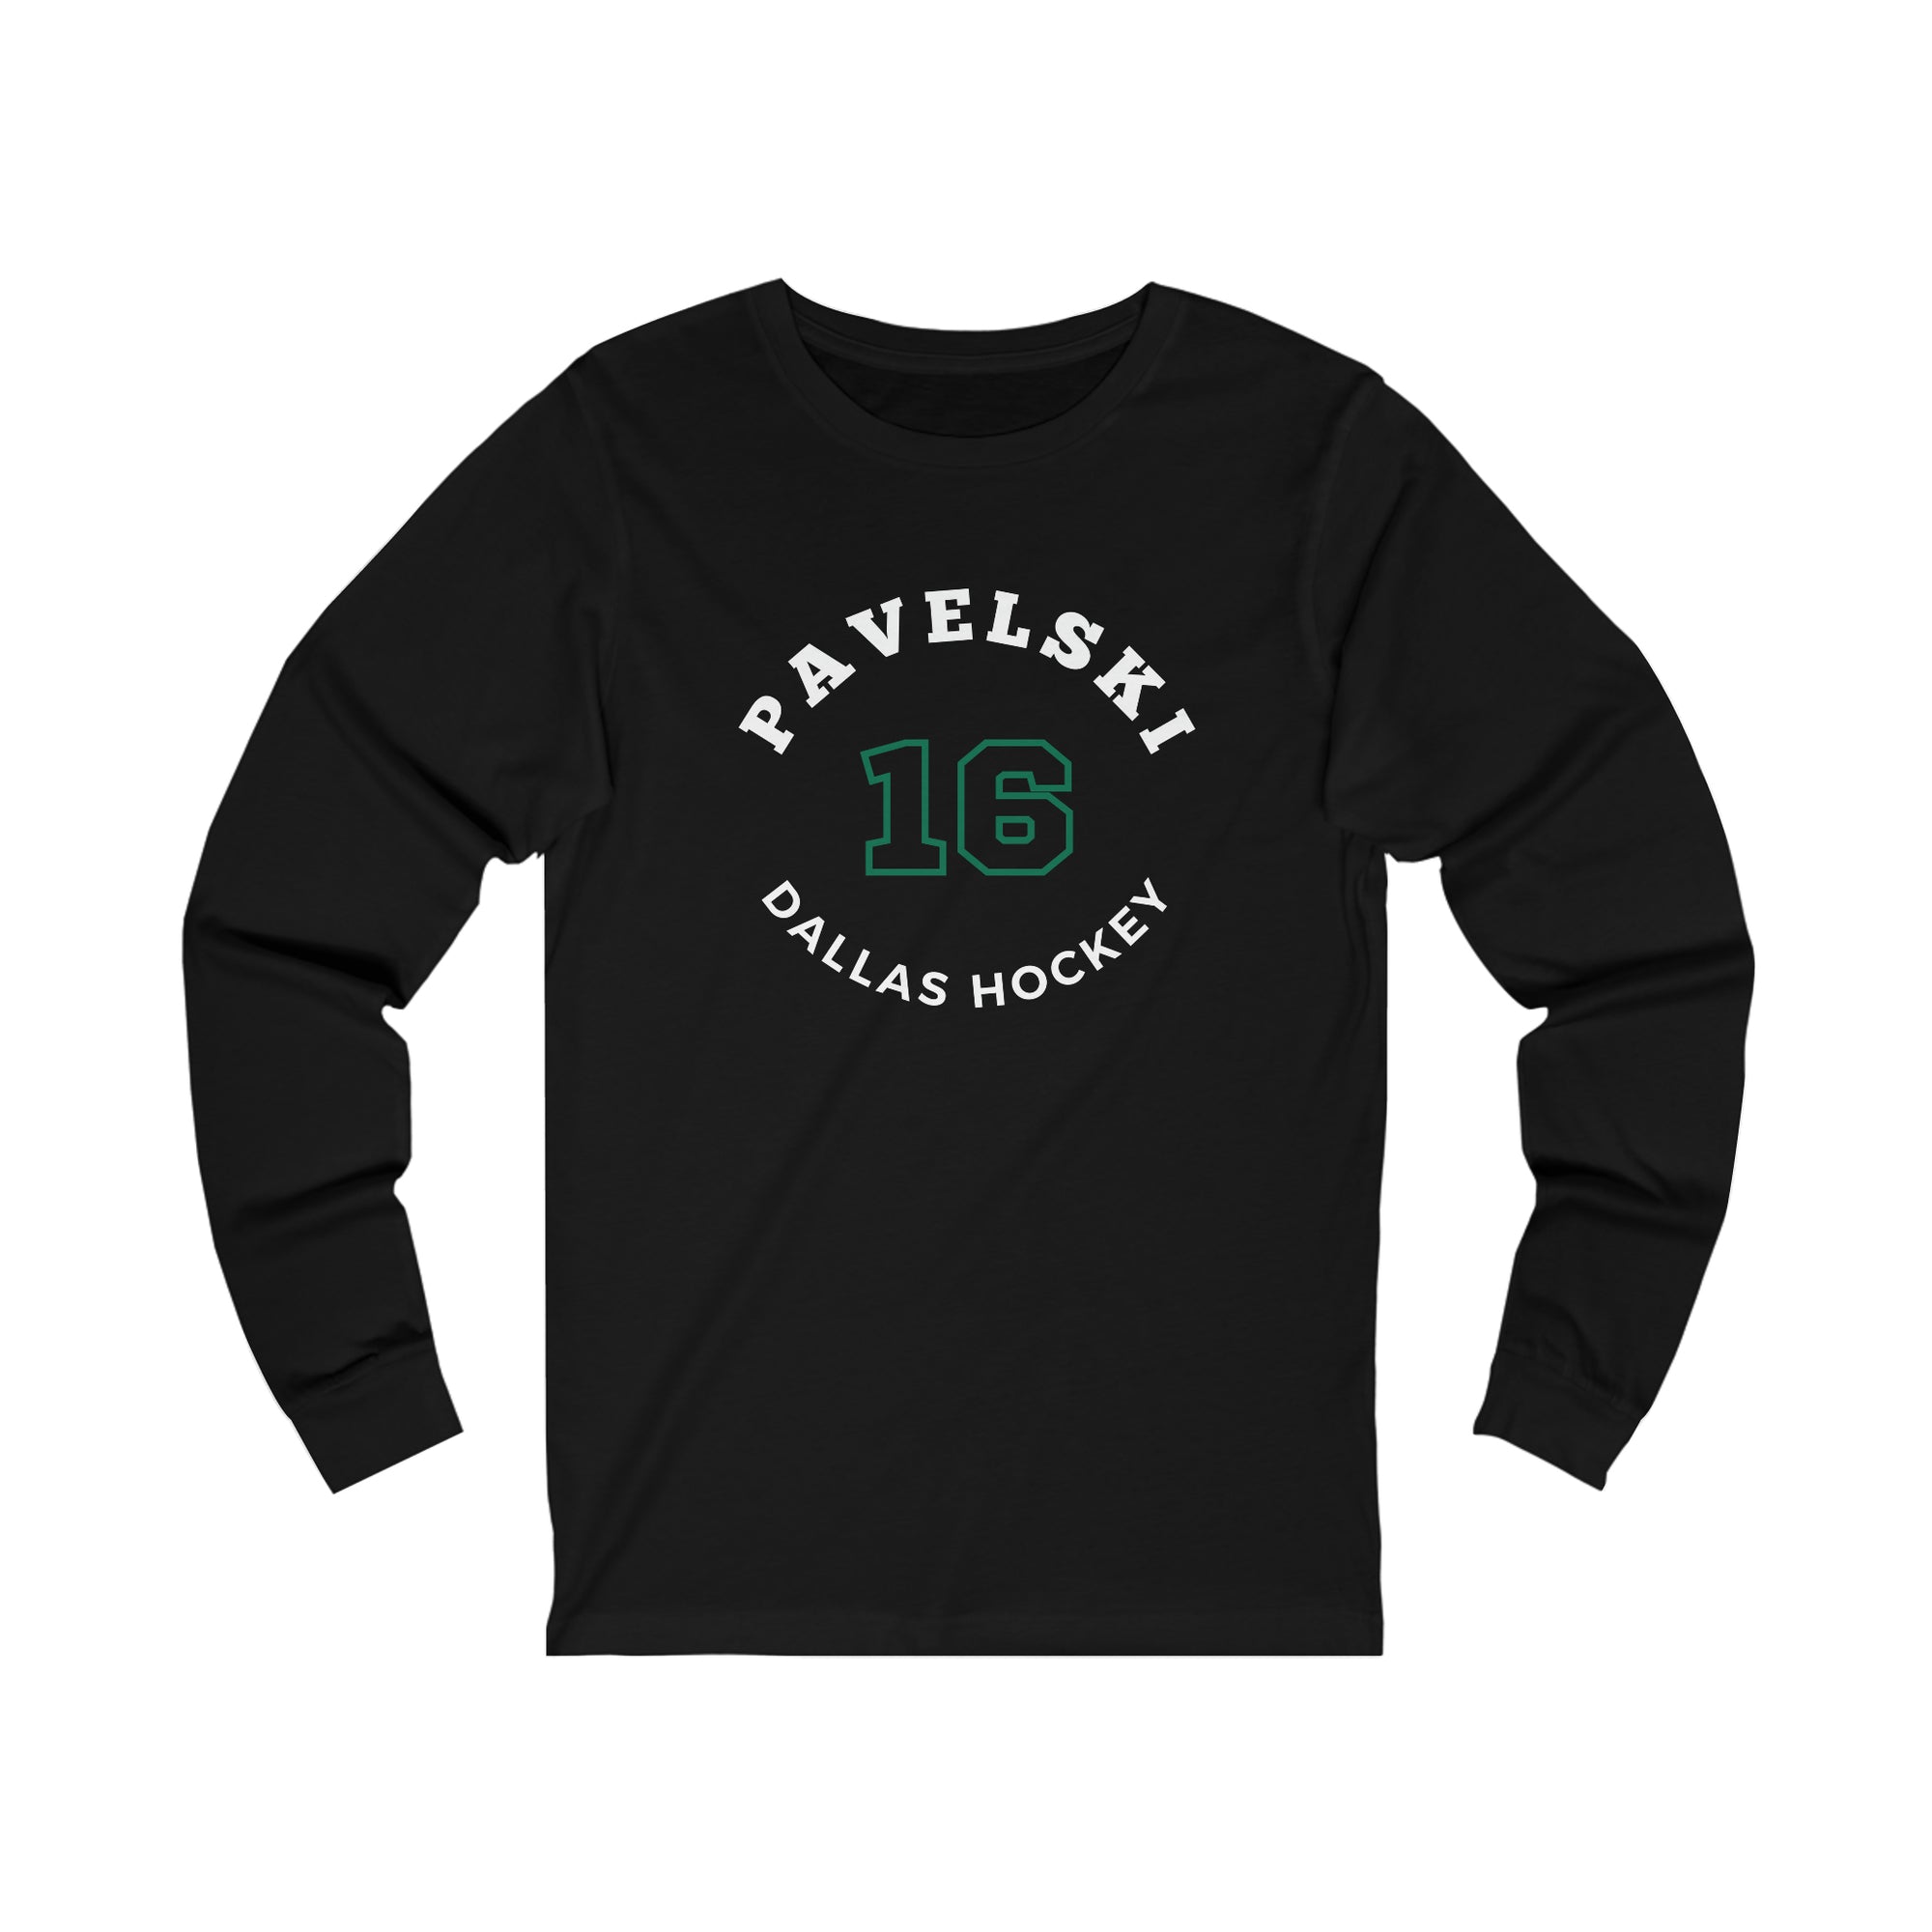 Pavelski 16 Dallas Hockey Number Arch Design Unisex Jersey Long Sleeve Shirt